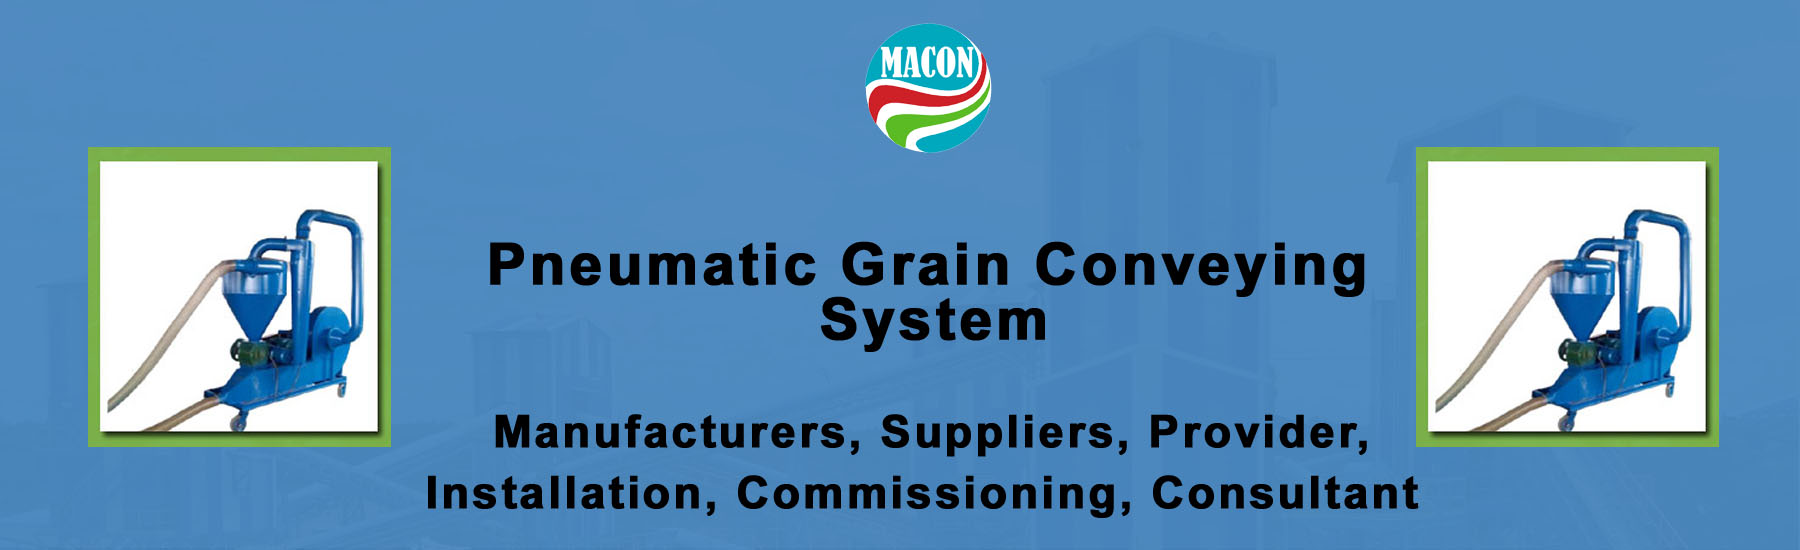 Pneumatic Grain Conveying System